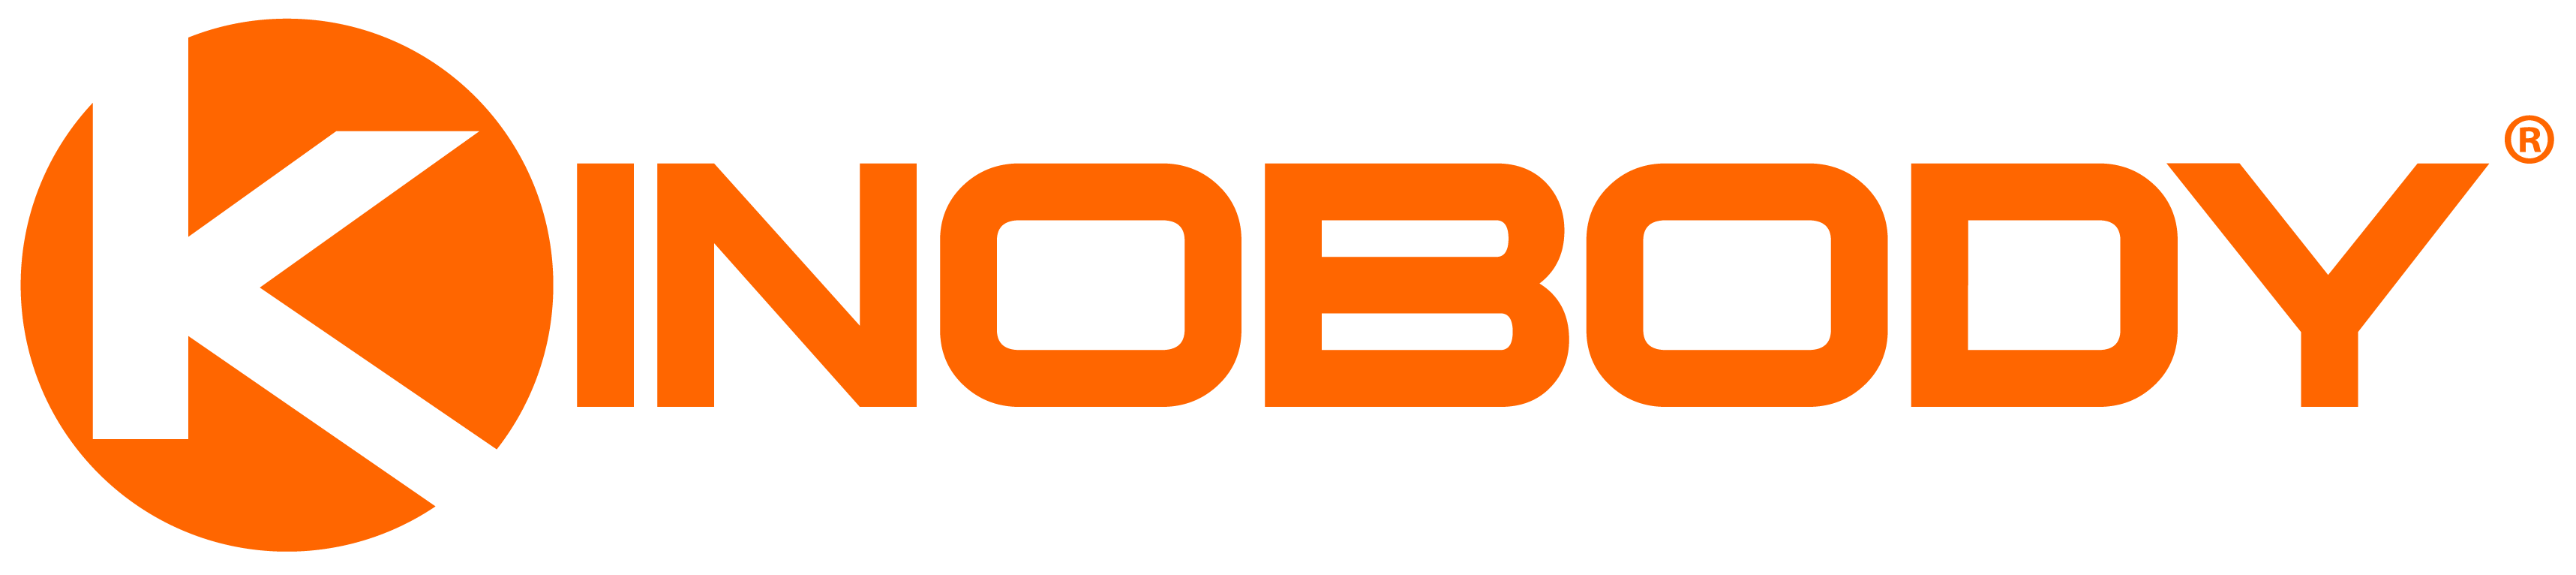 Orange Boxy R Logo - Kinobody Fitness | Kinobody Fitness Systems